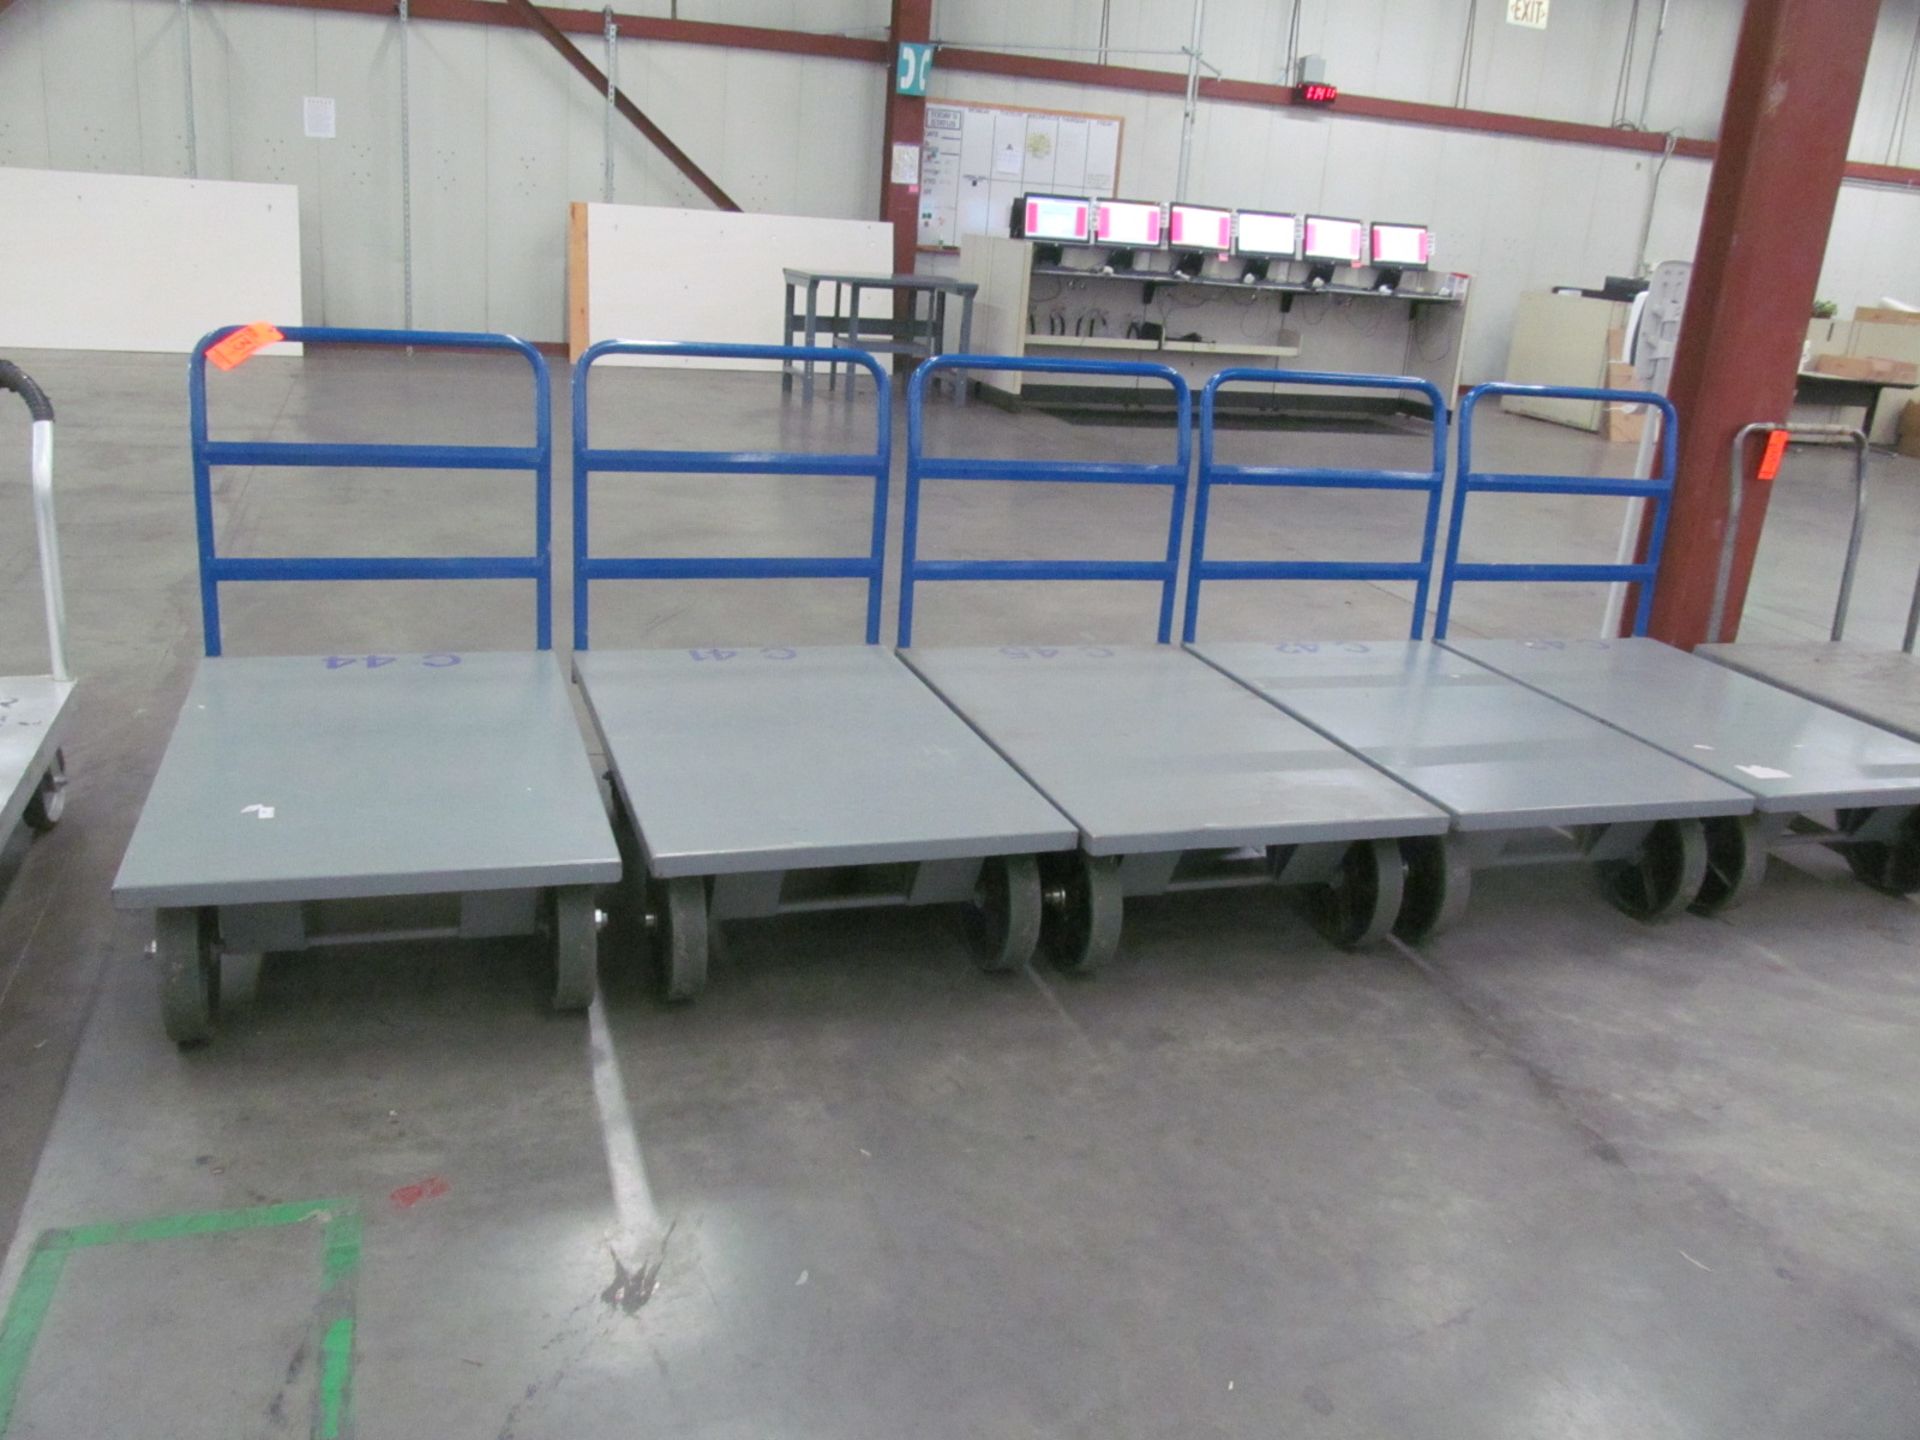 Lot of (5) heavy duty steel platform shop carts with removable handles, 30" x 40" platform